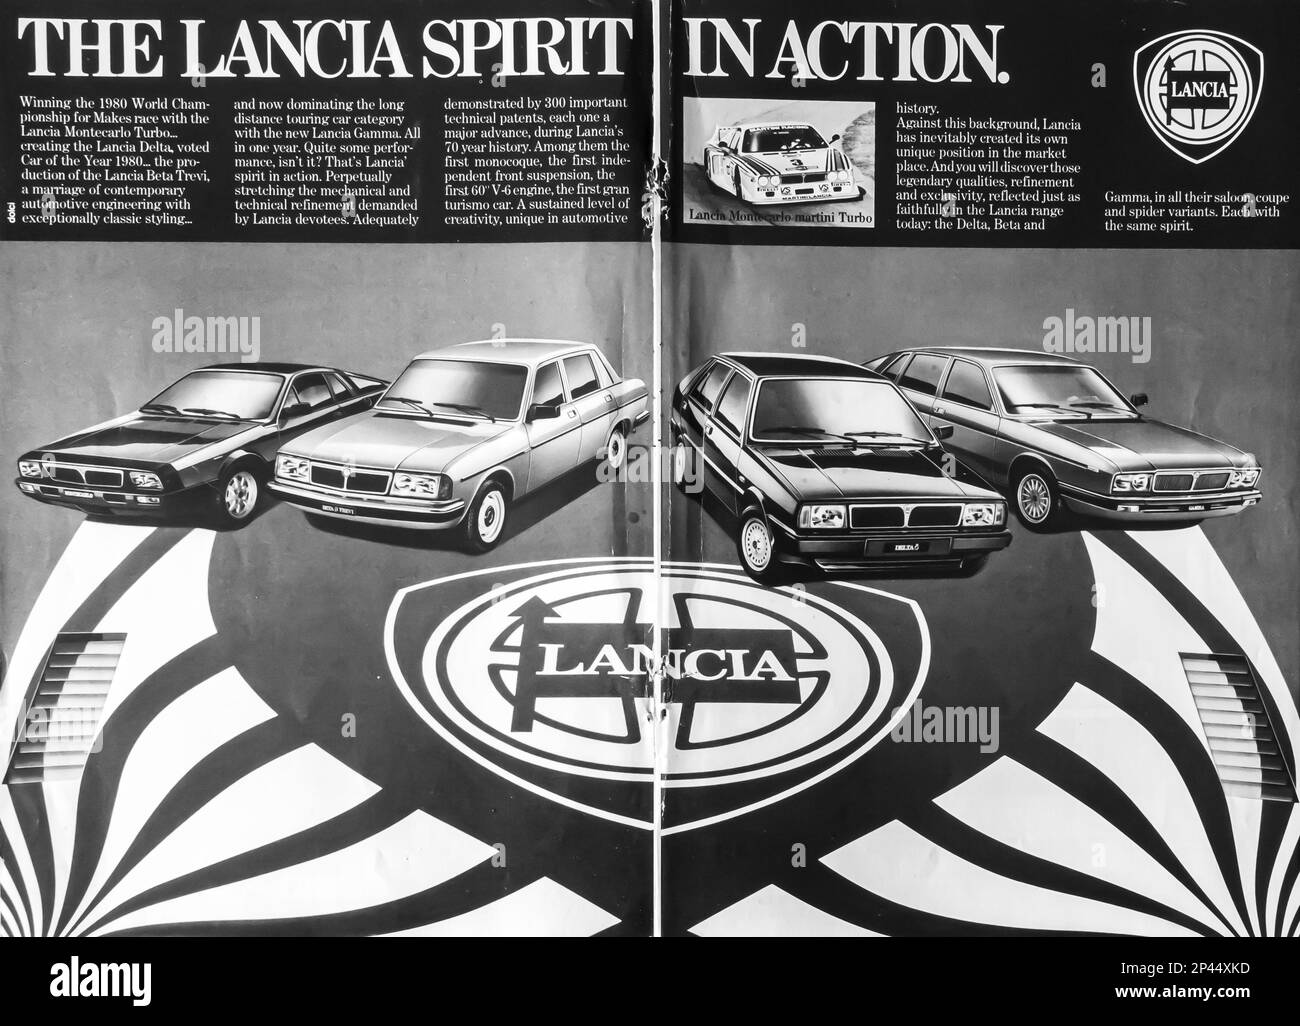 Lancia advert in a Natgeo magazine June 1981 Stock Photo